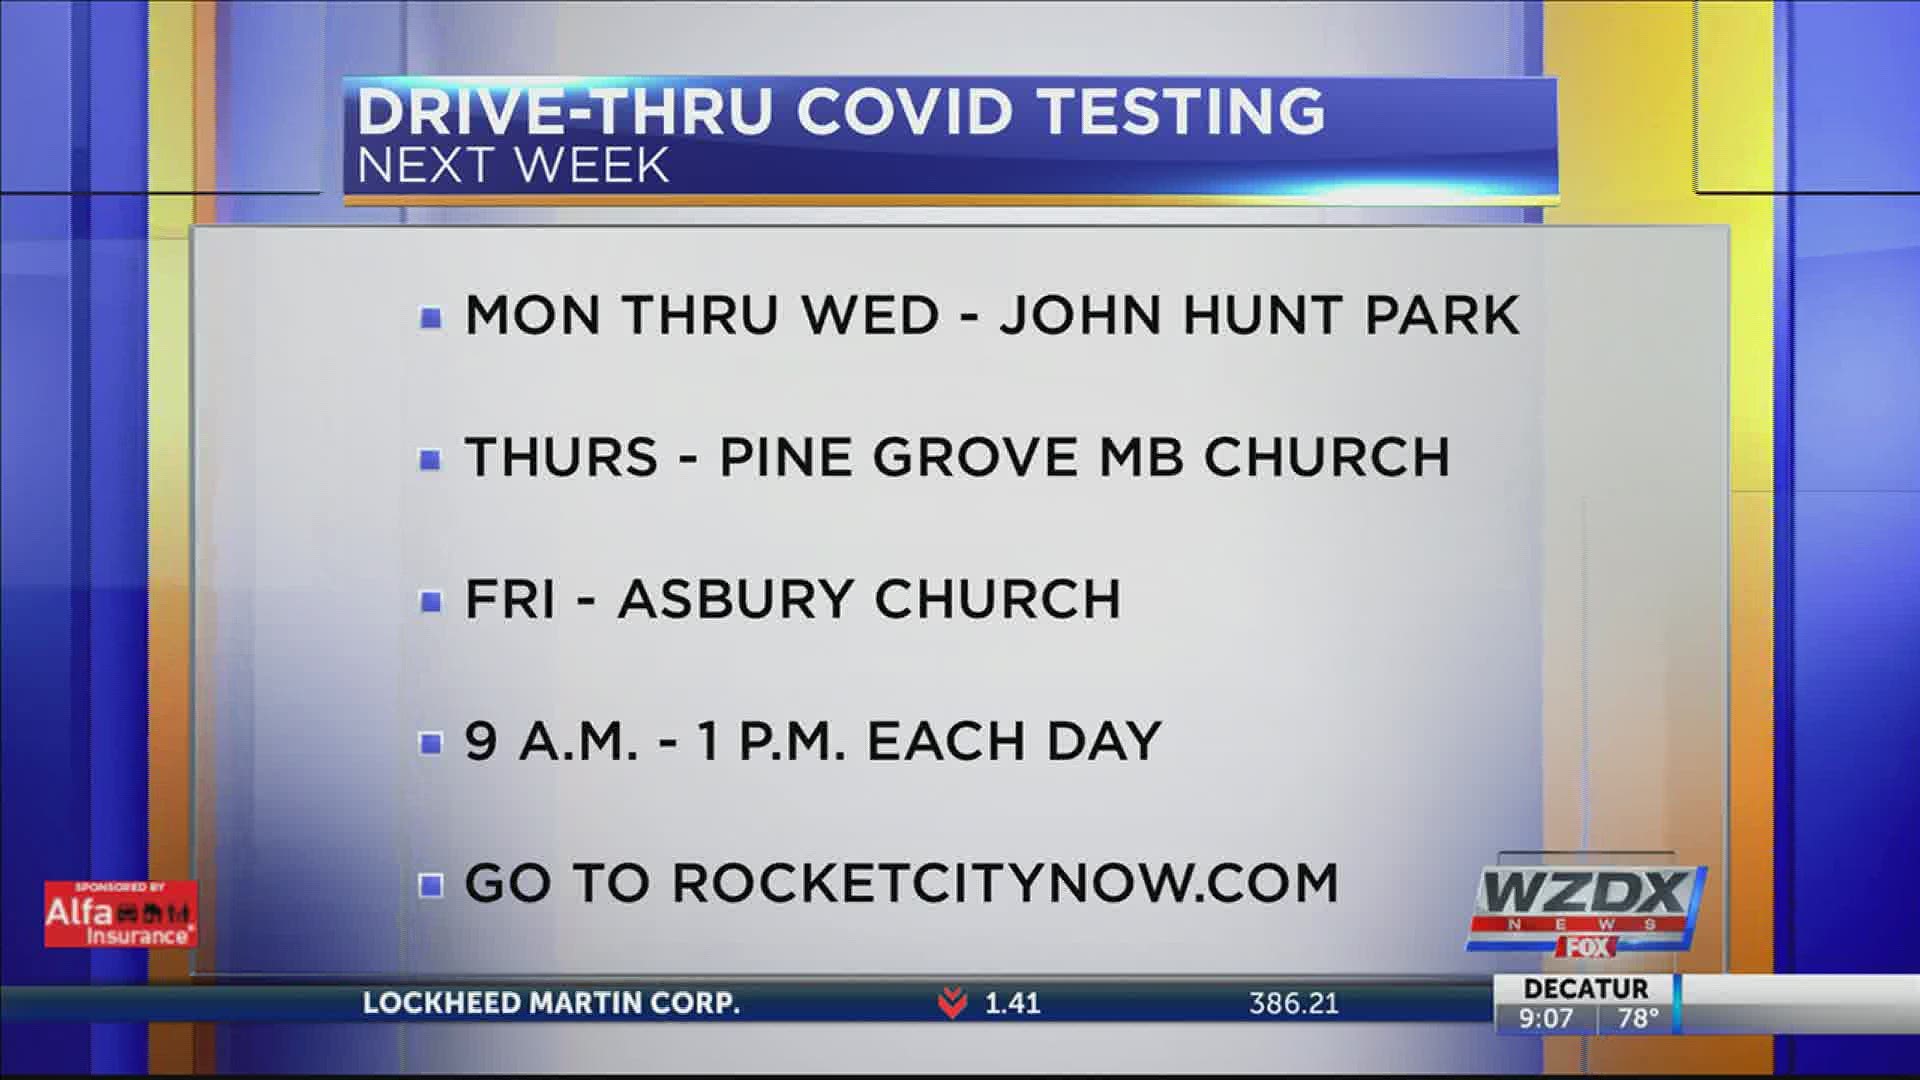 Testing will be held at John Hunt Park, Pin Grove Missionary Baptist Church and Asbury Church.